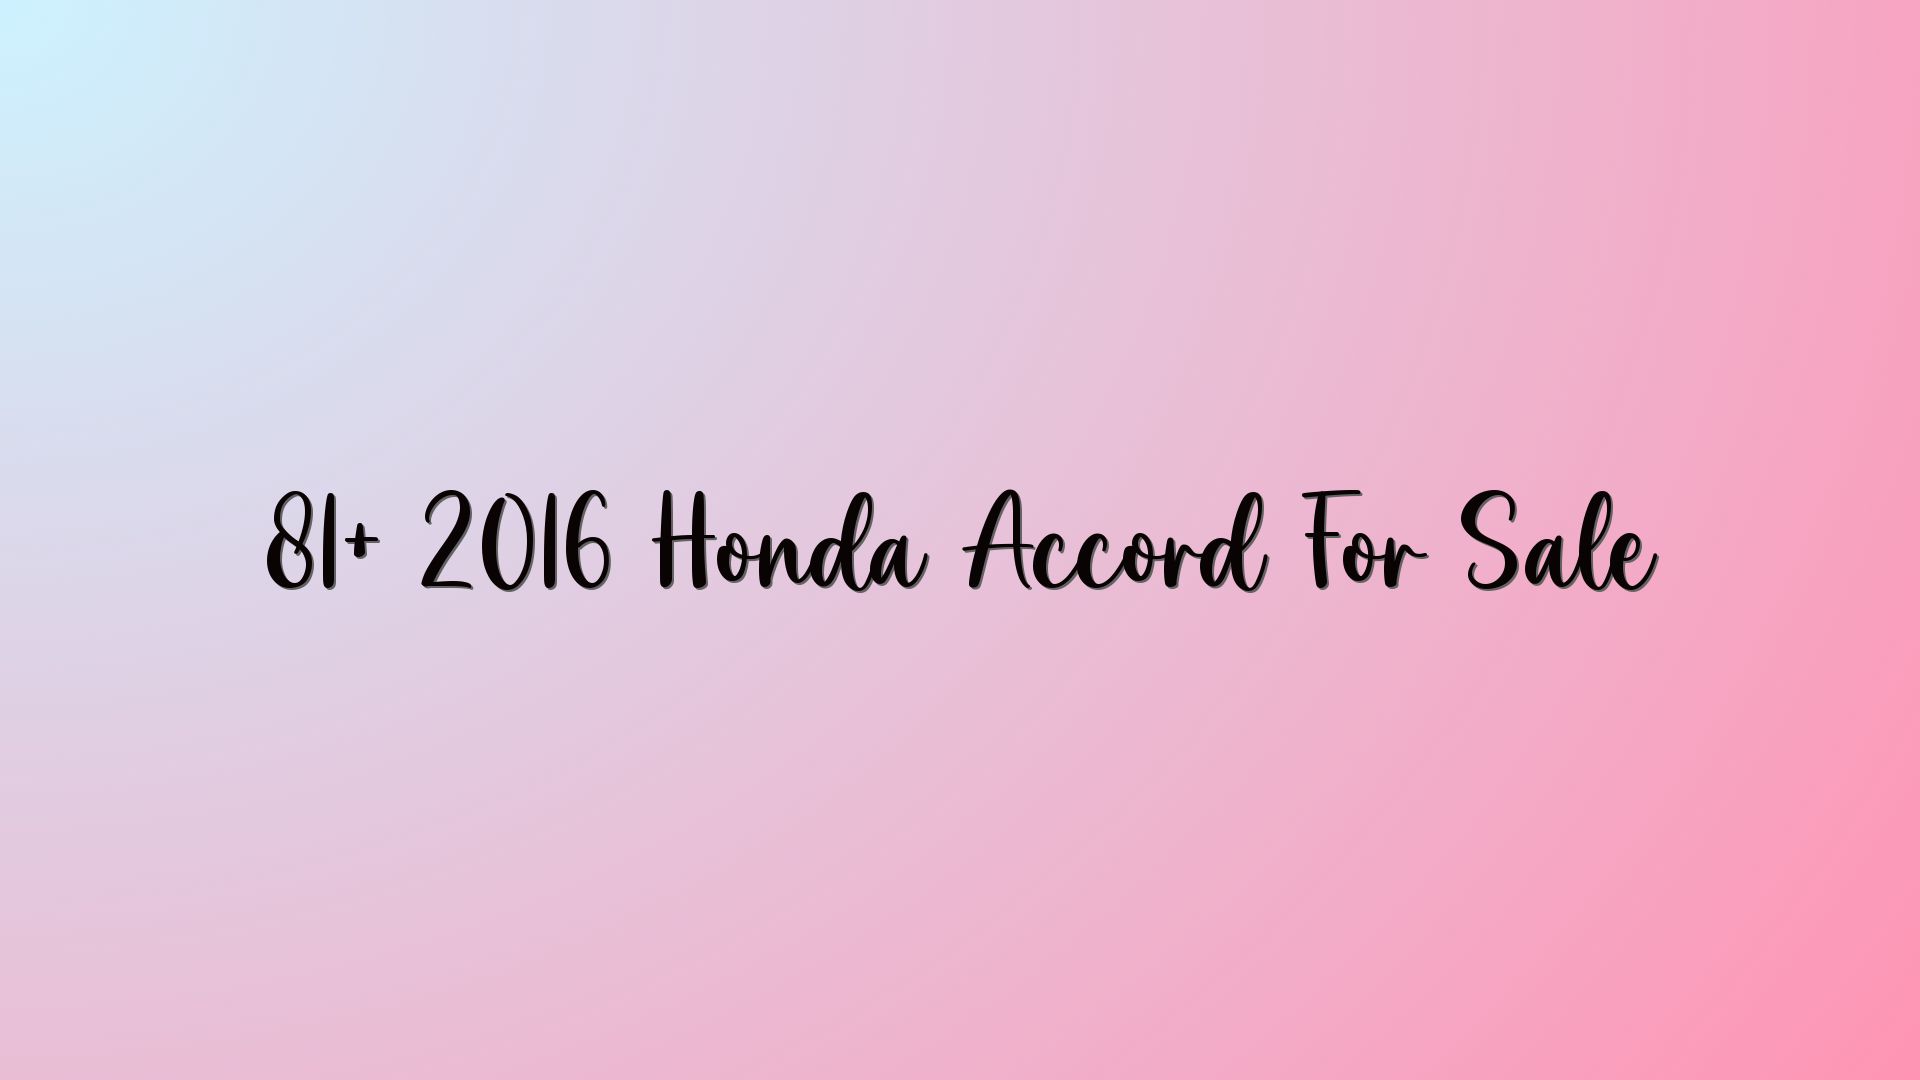 81+ 2016 Honda Accord For Sale